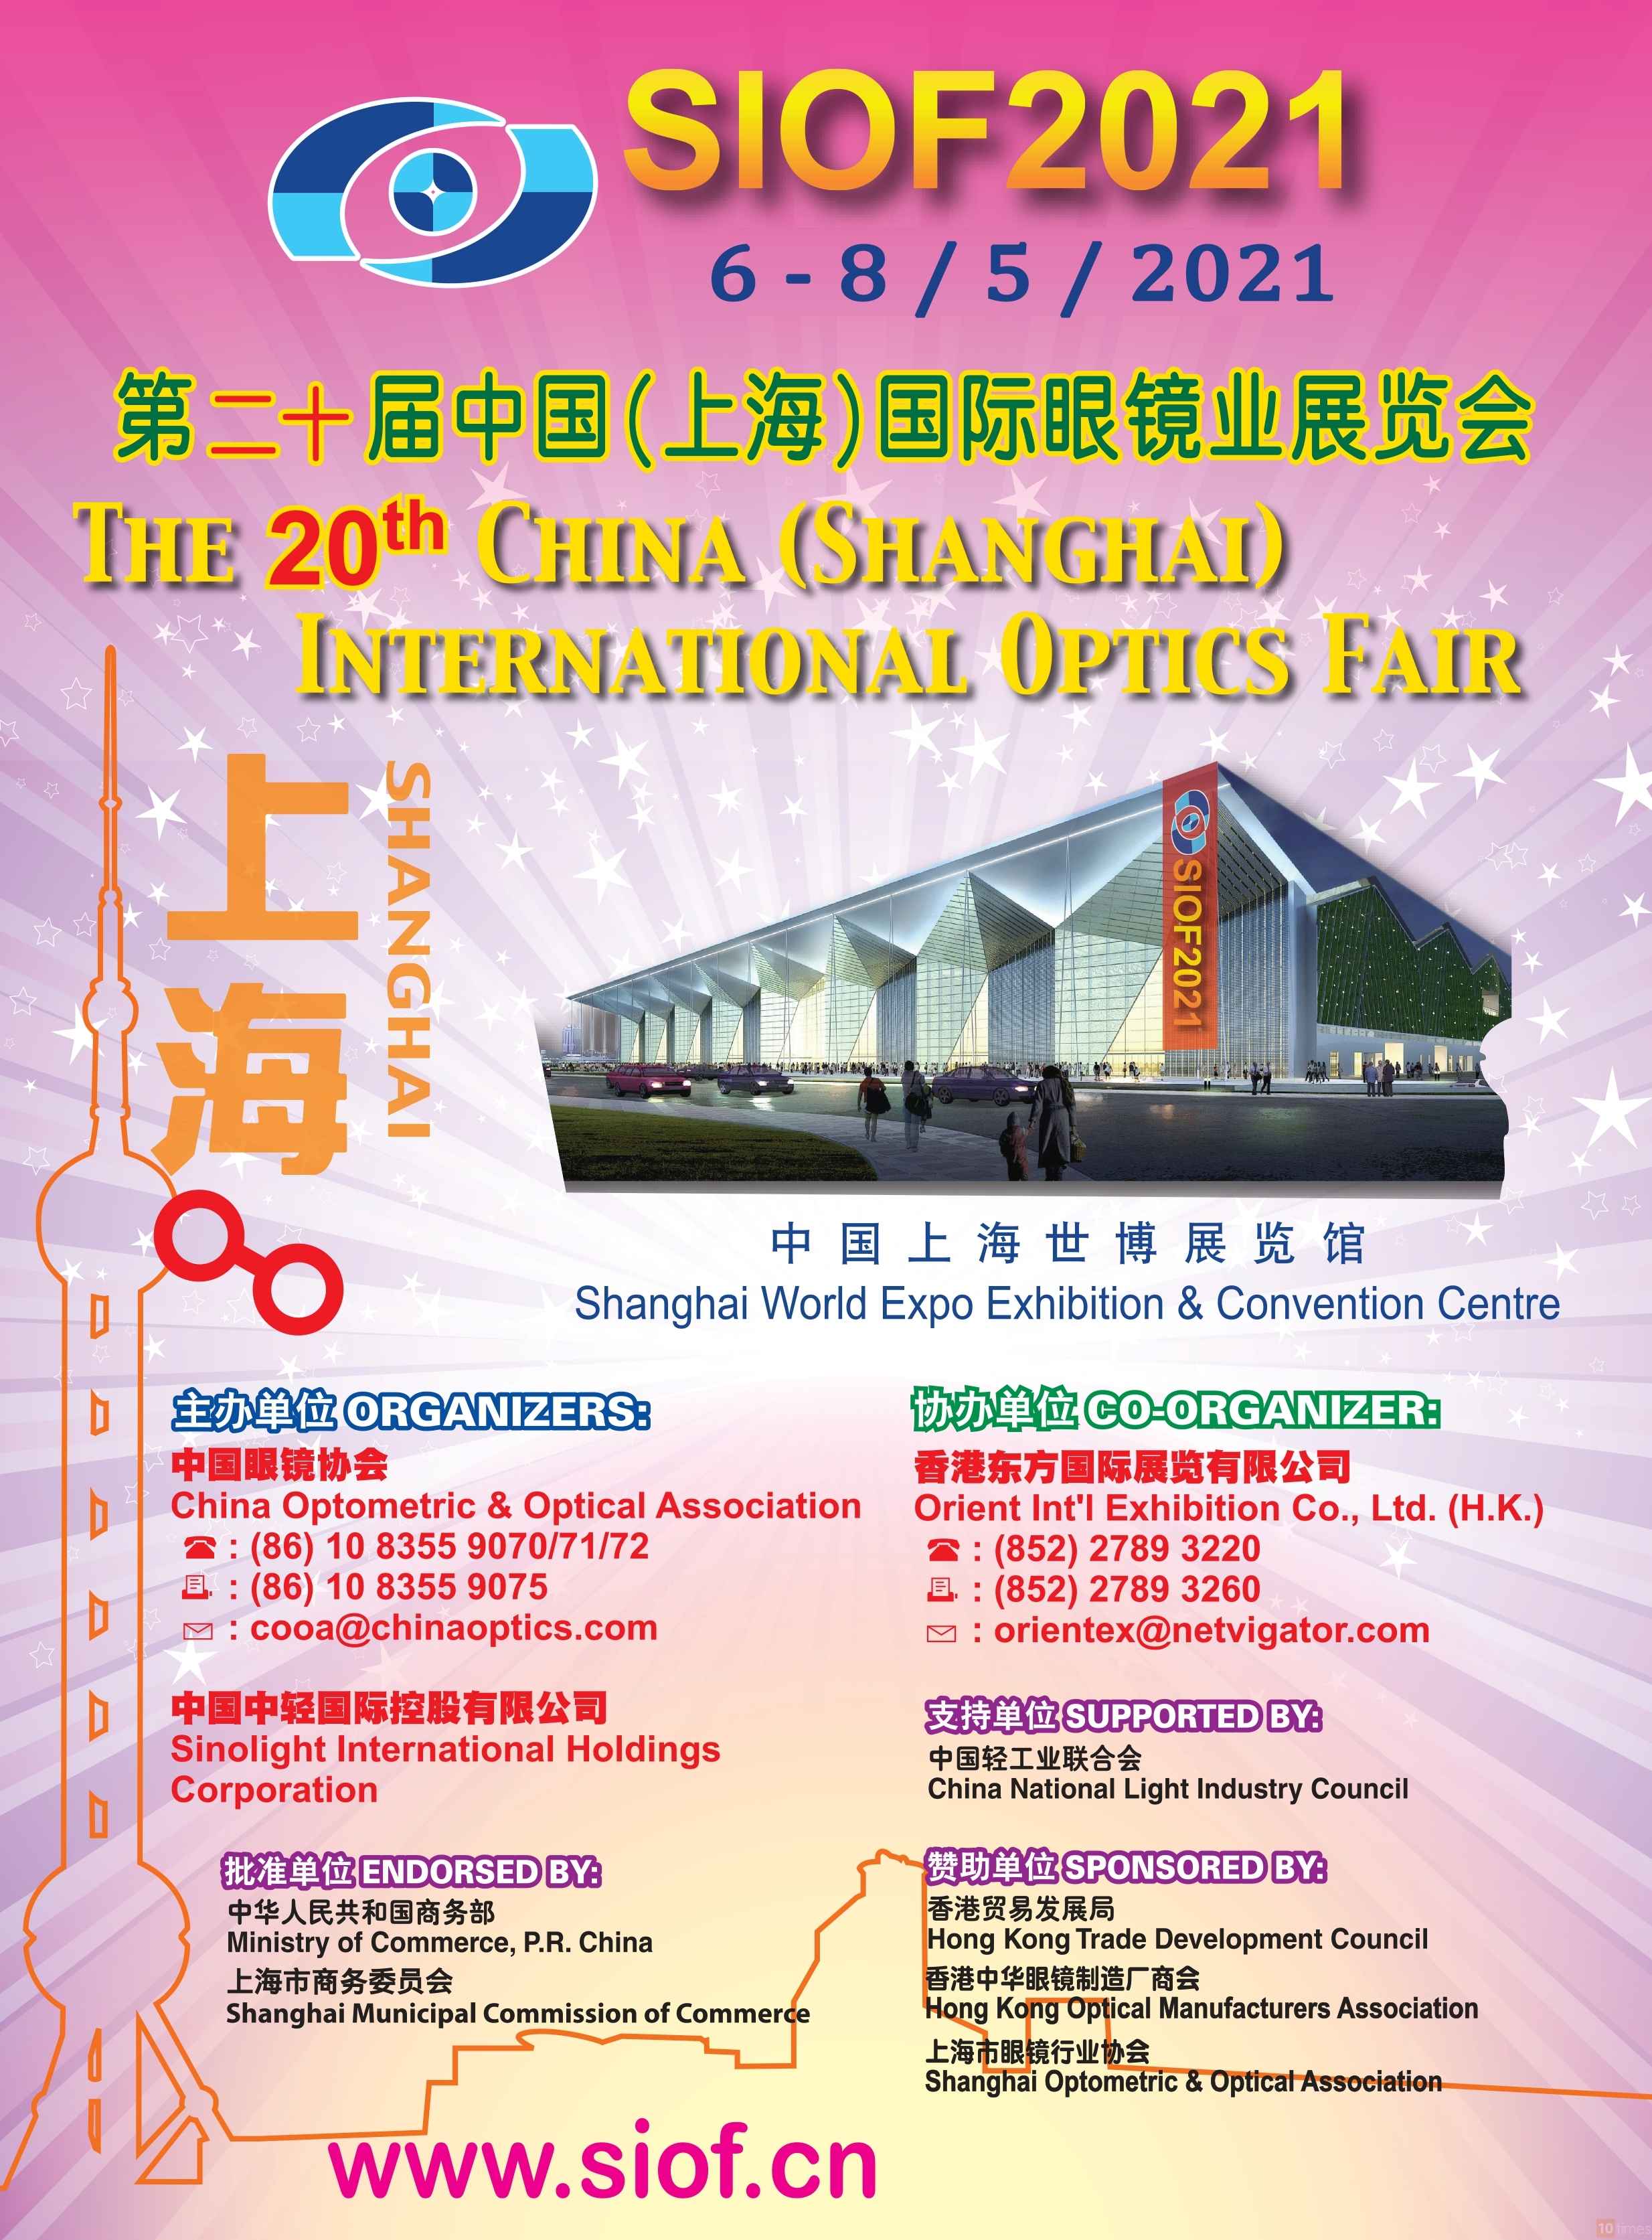 SIOF (Feb 2025), China (Shanghai) International Optics Fair, Shanghai